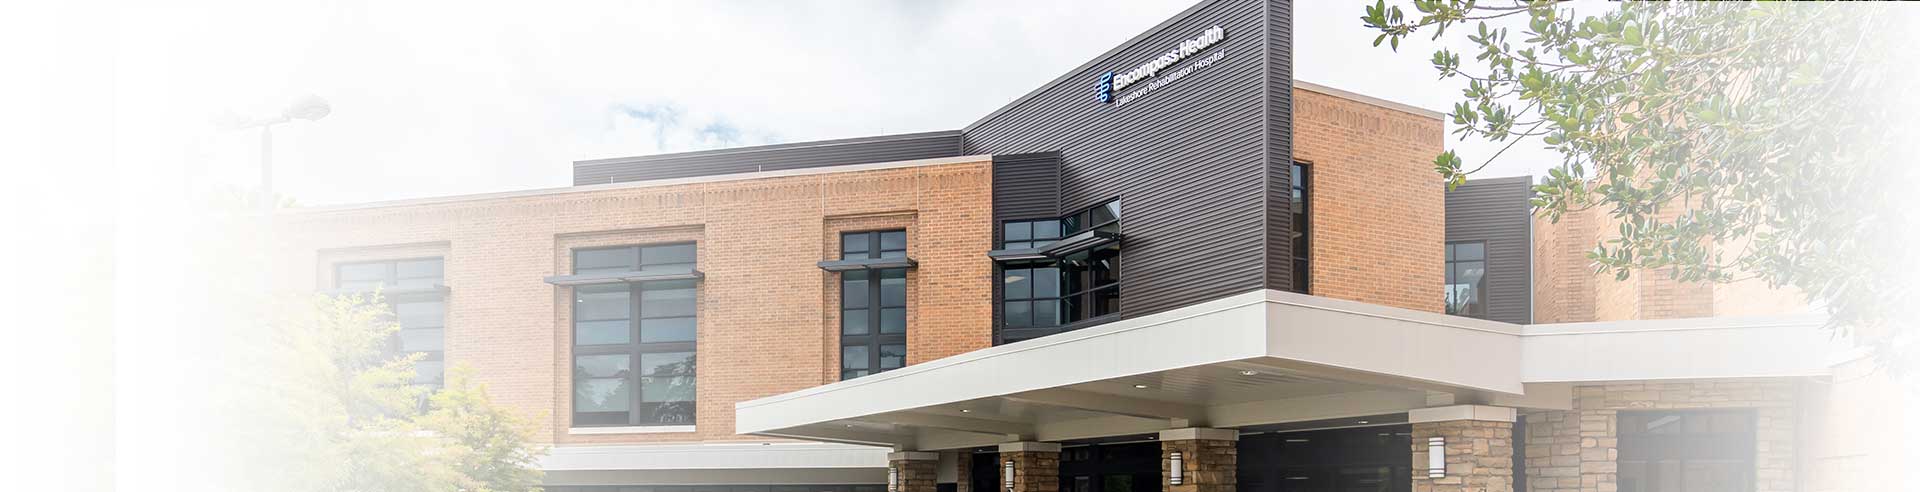 Encompass Health Lakershore Rehabilitation Hospital exterior